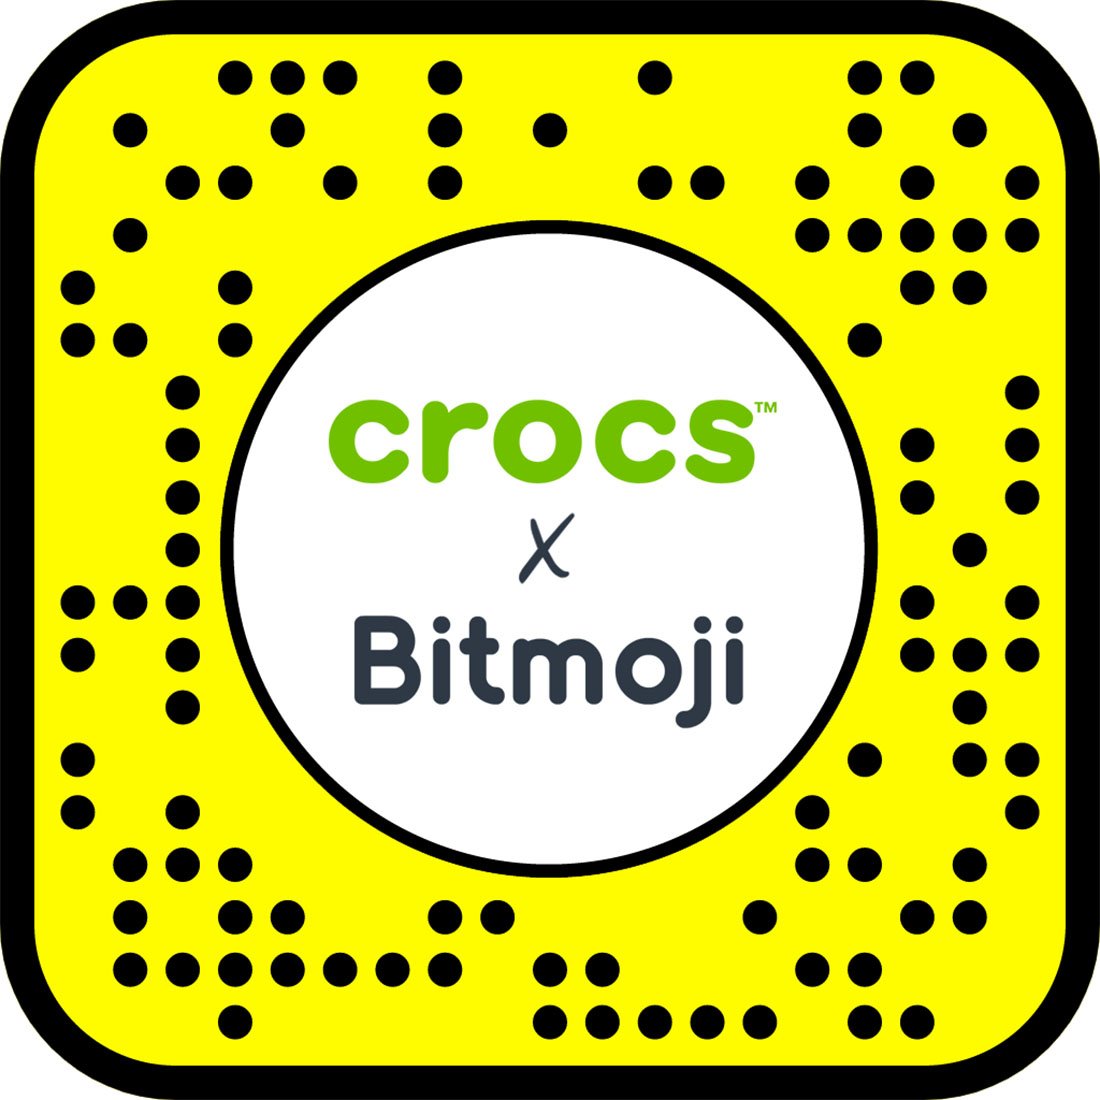 Crocs x Snapchat x Bitmoji